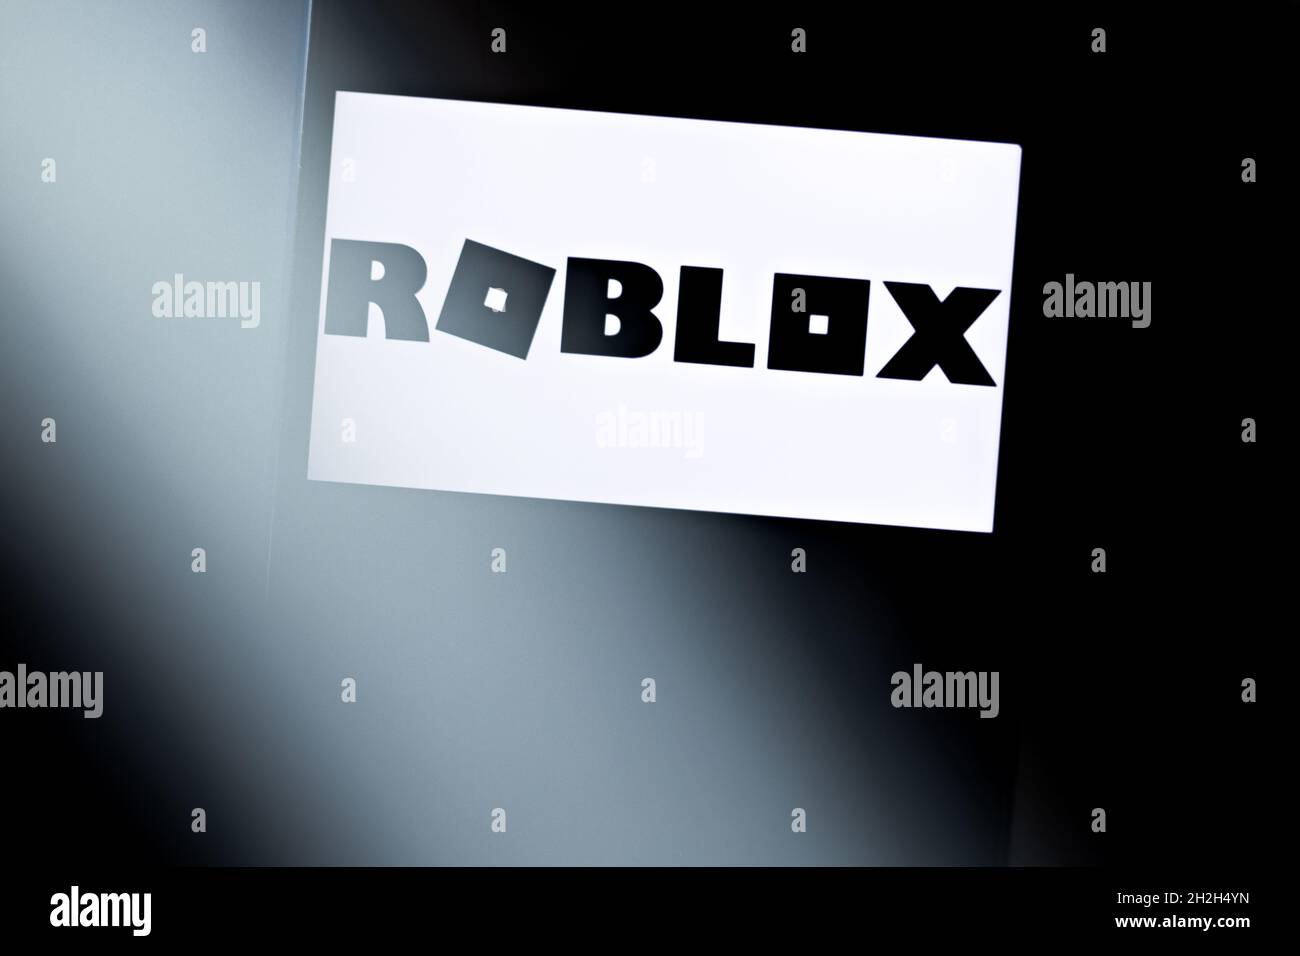 Roblox.com Web Site. Selective Focus. Editorial Stock Image